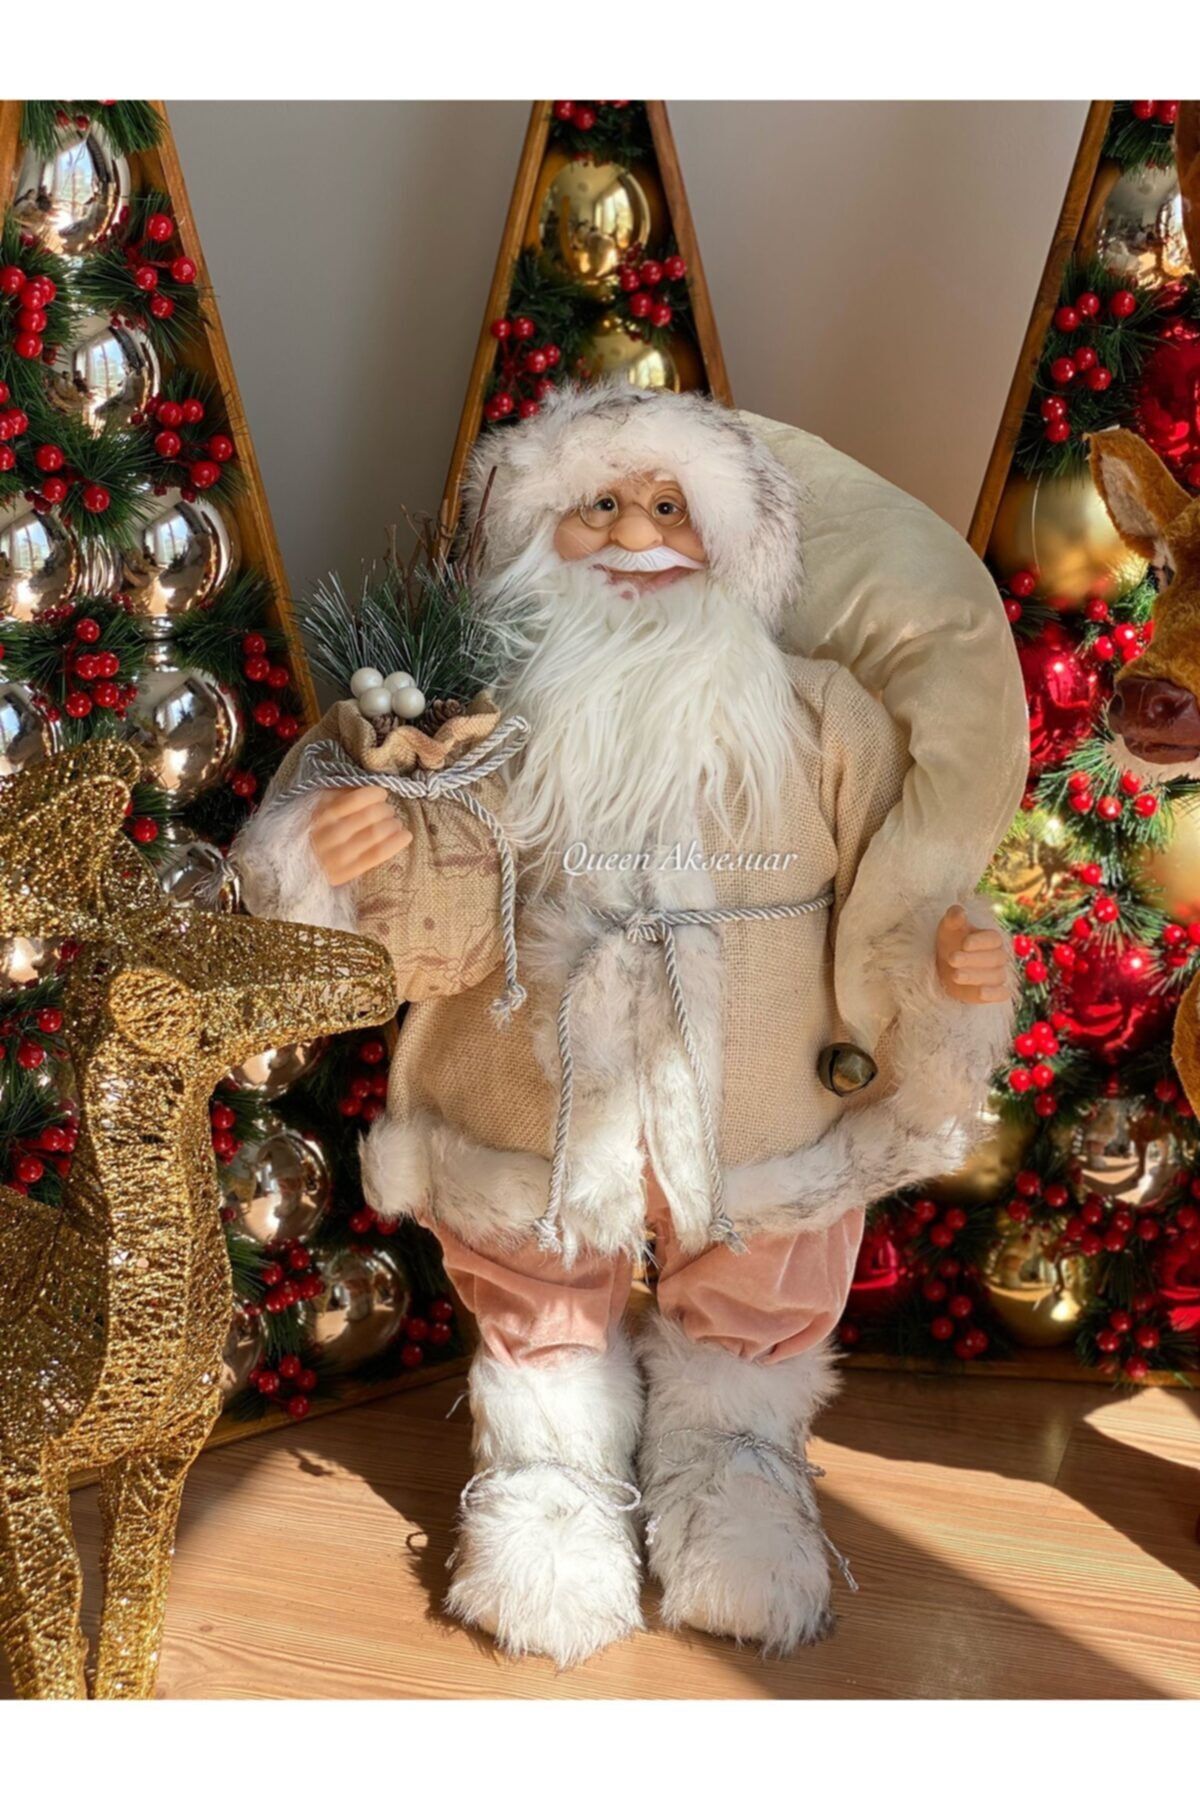 QUEEN AKSESUAR Yılbaşı Özel Yeni Yıl Ithal Dev 60cm Noel Baba Heykel Süs Santa Claus Aziz Nikola No1 Pembe